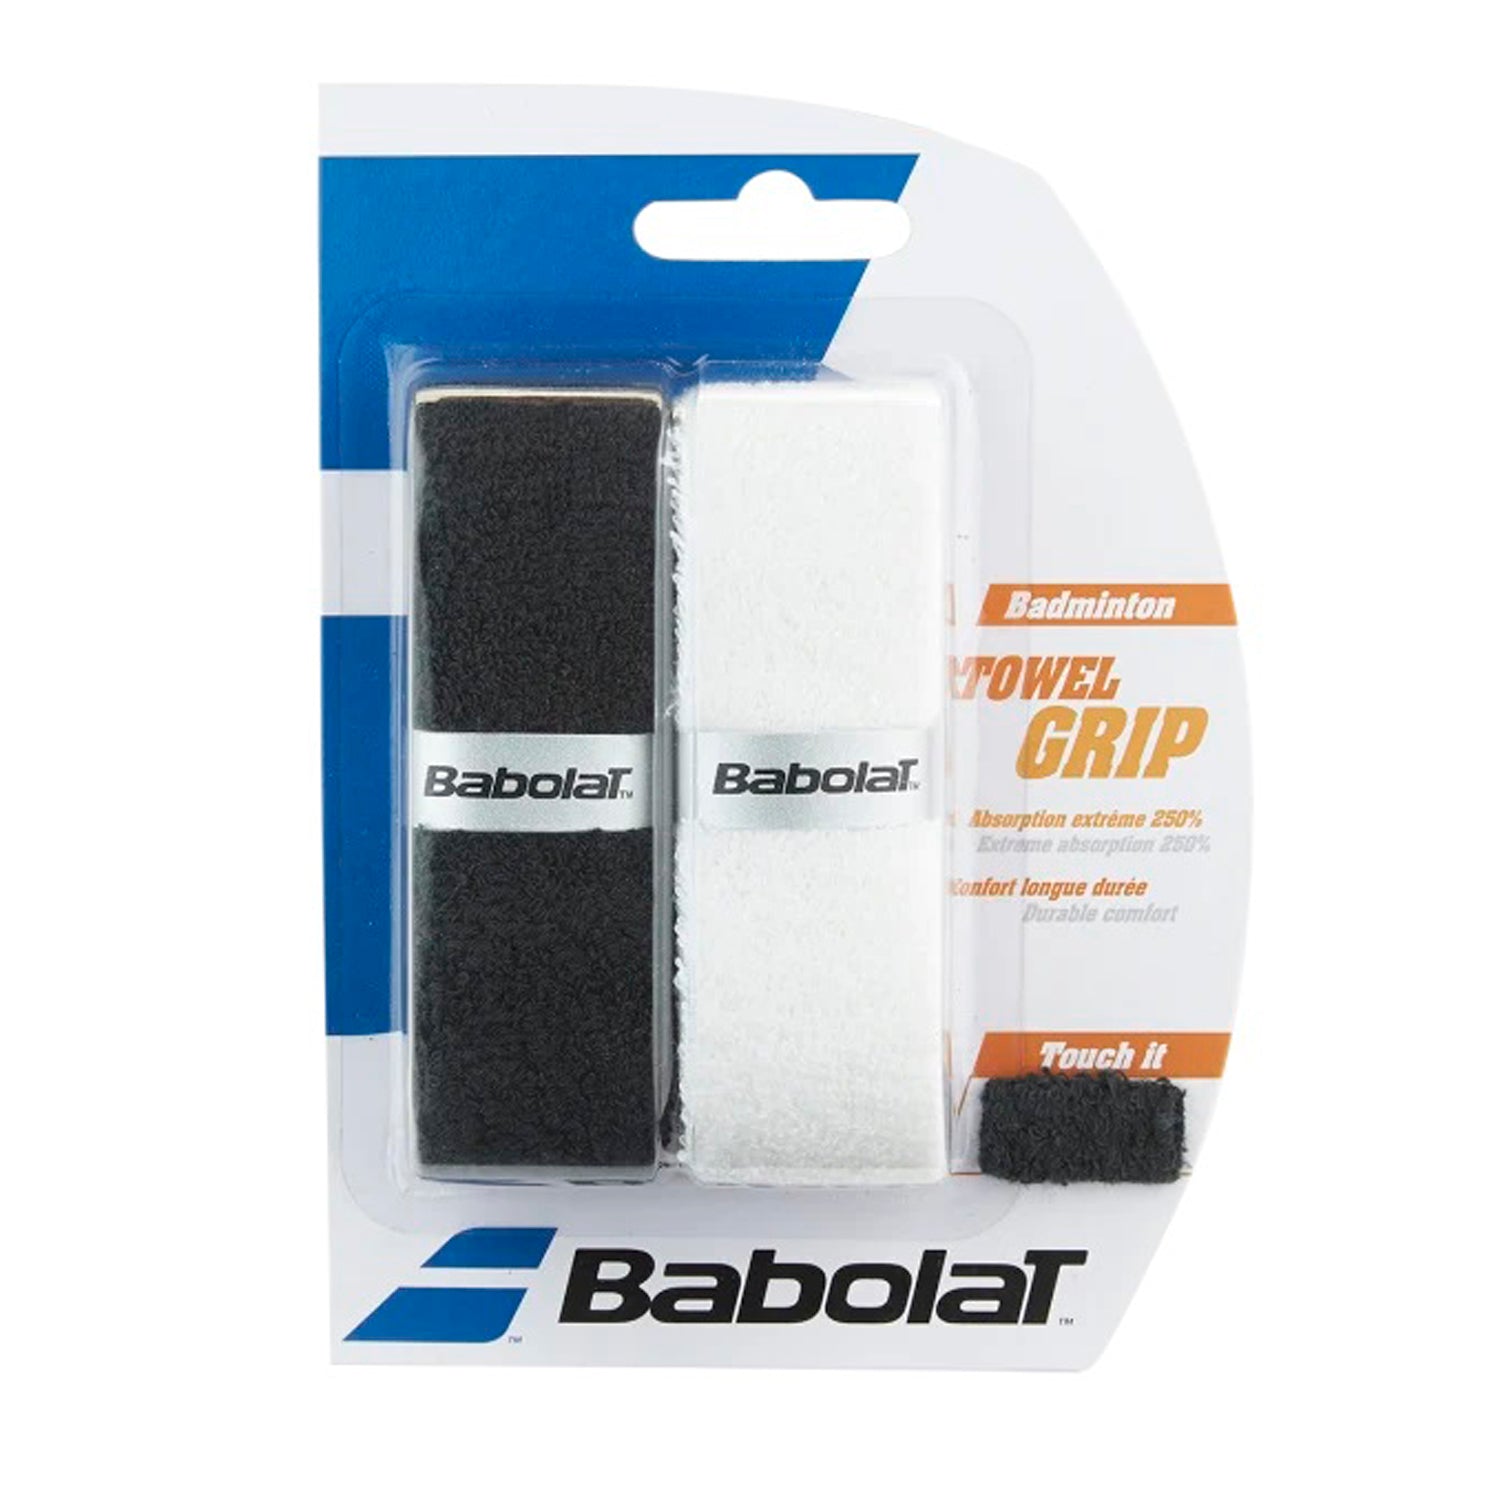 Babolat 670032 Towel Grip - White/Black - Best Price online Prokicksports.com